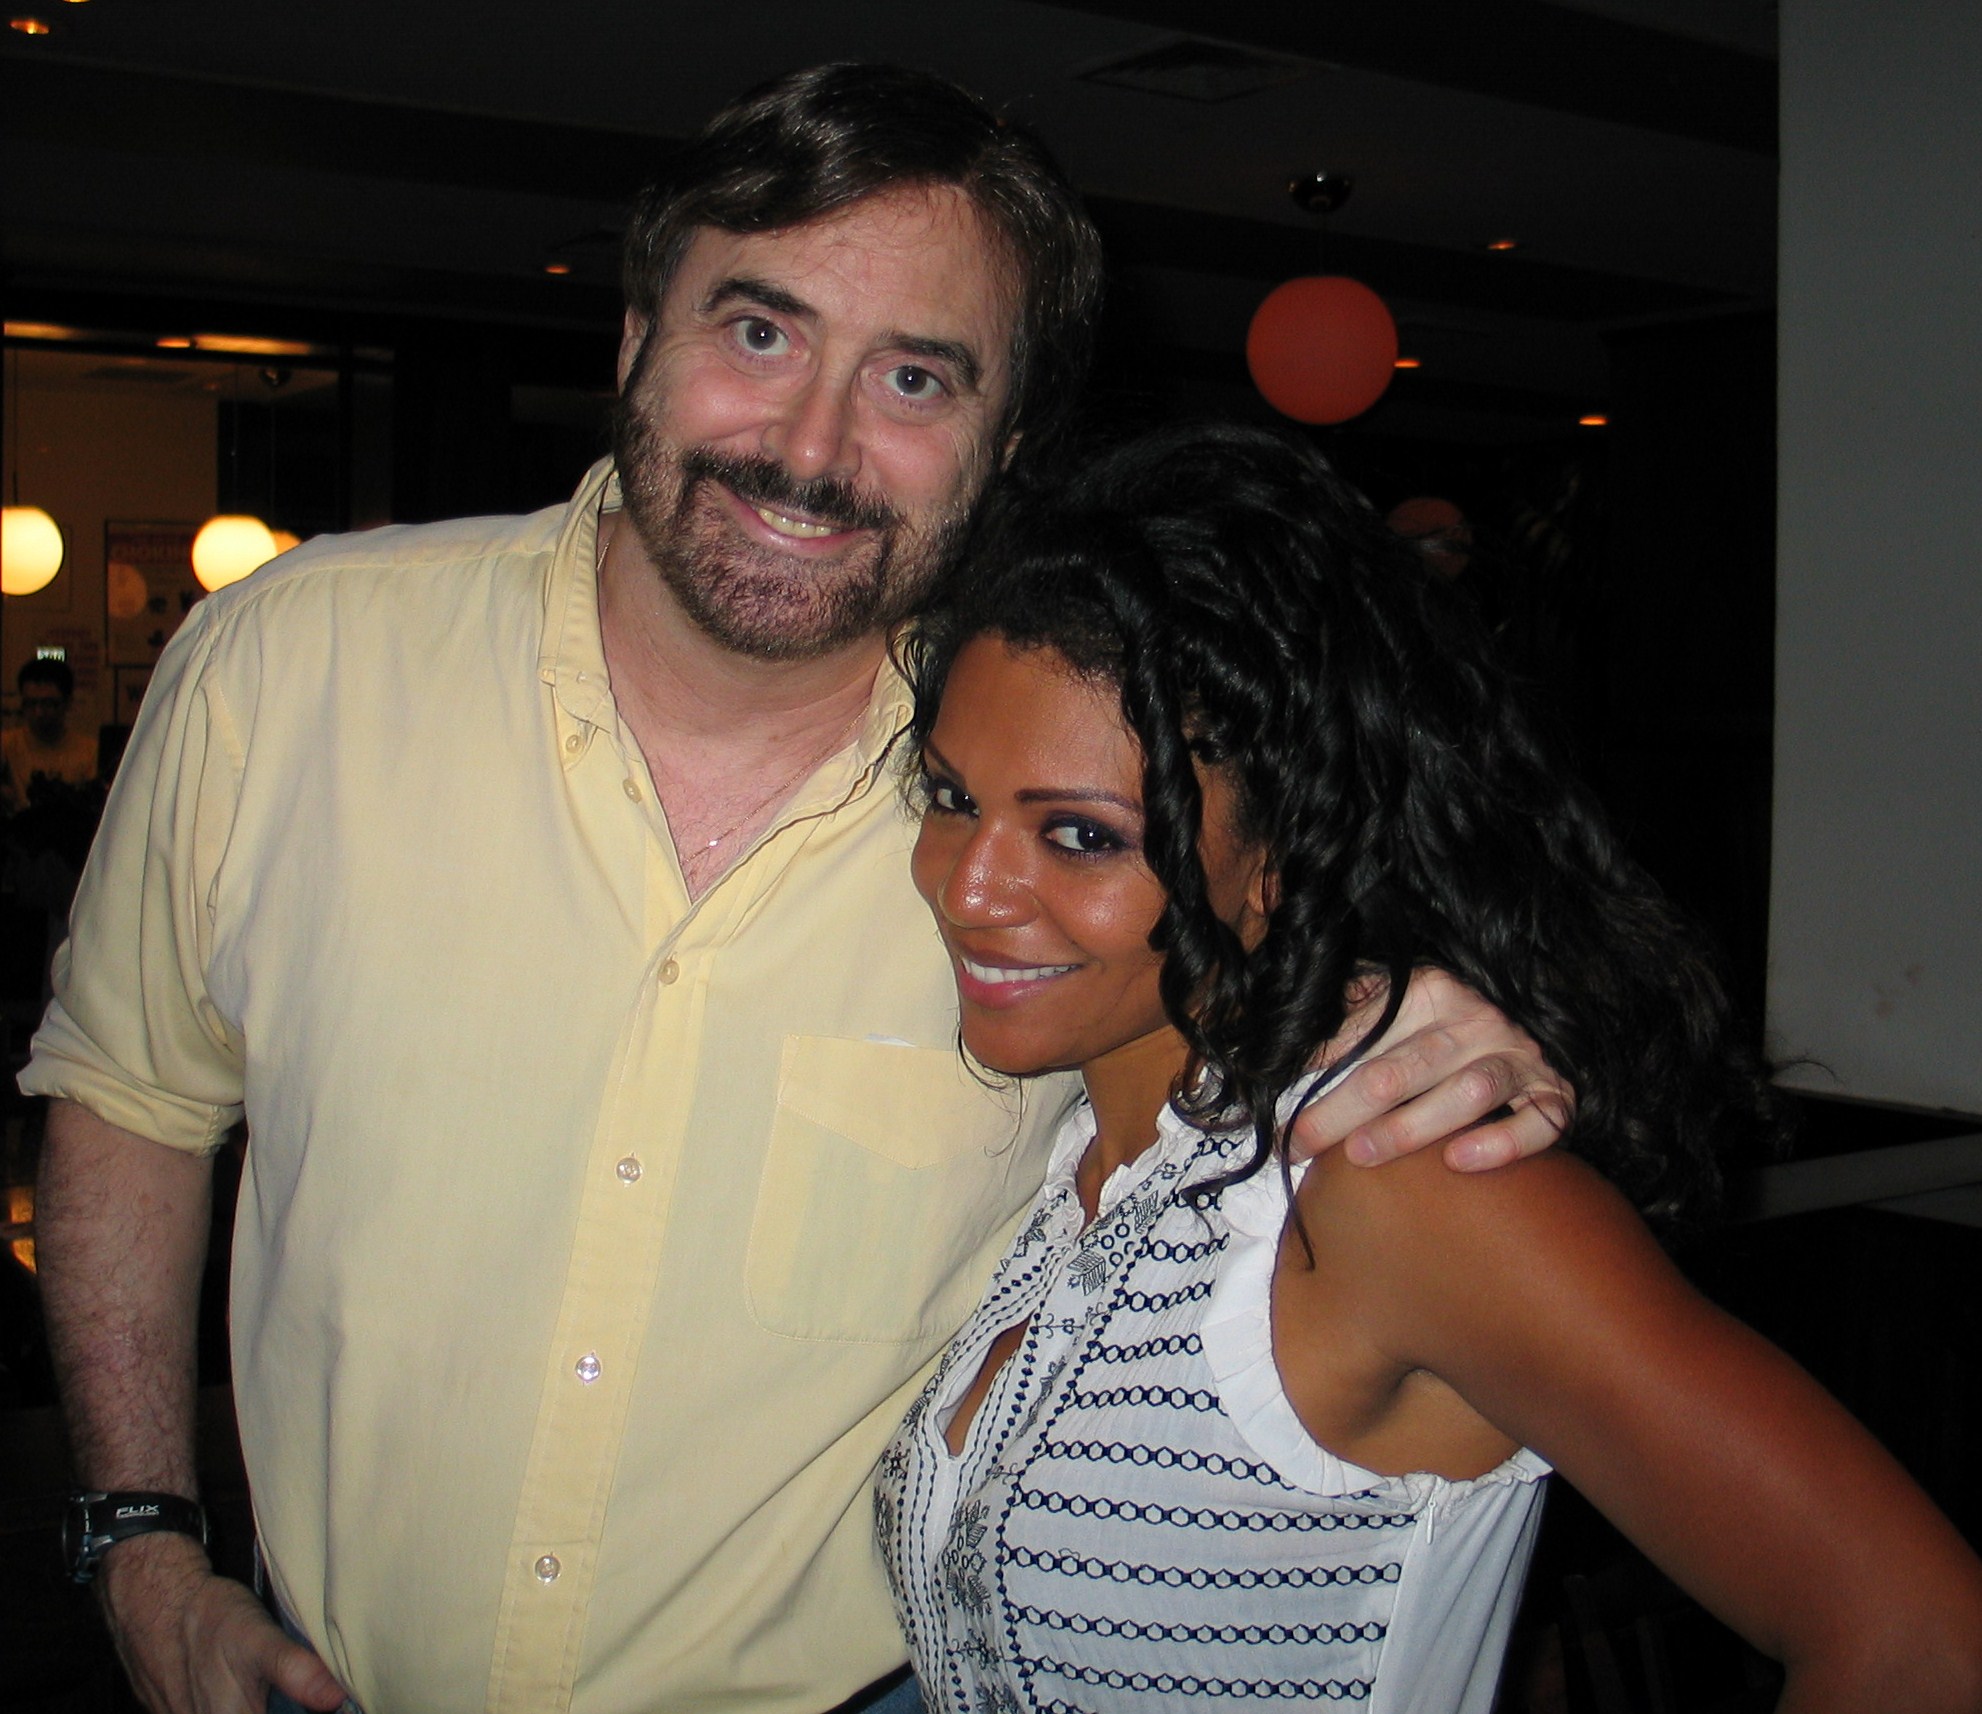 Seth Greenky with Tiara Parker, June 17, 2010